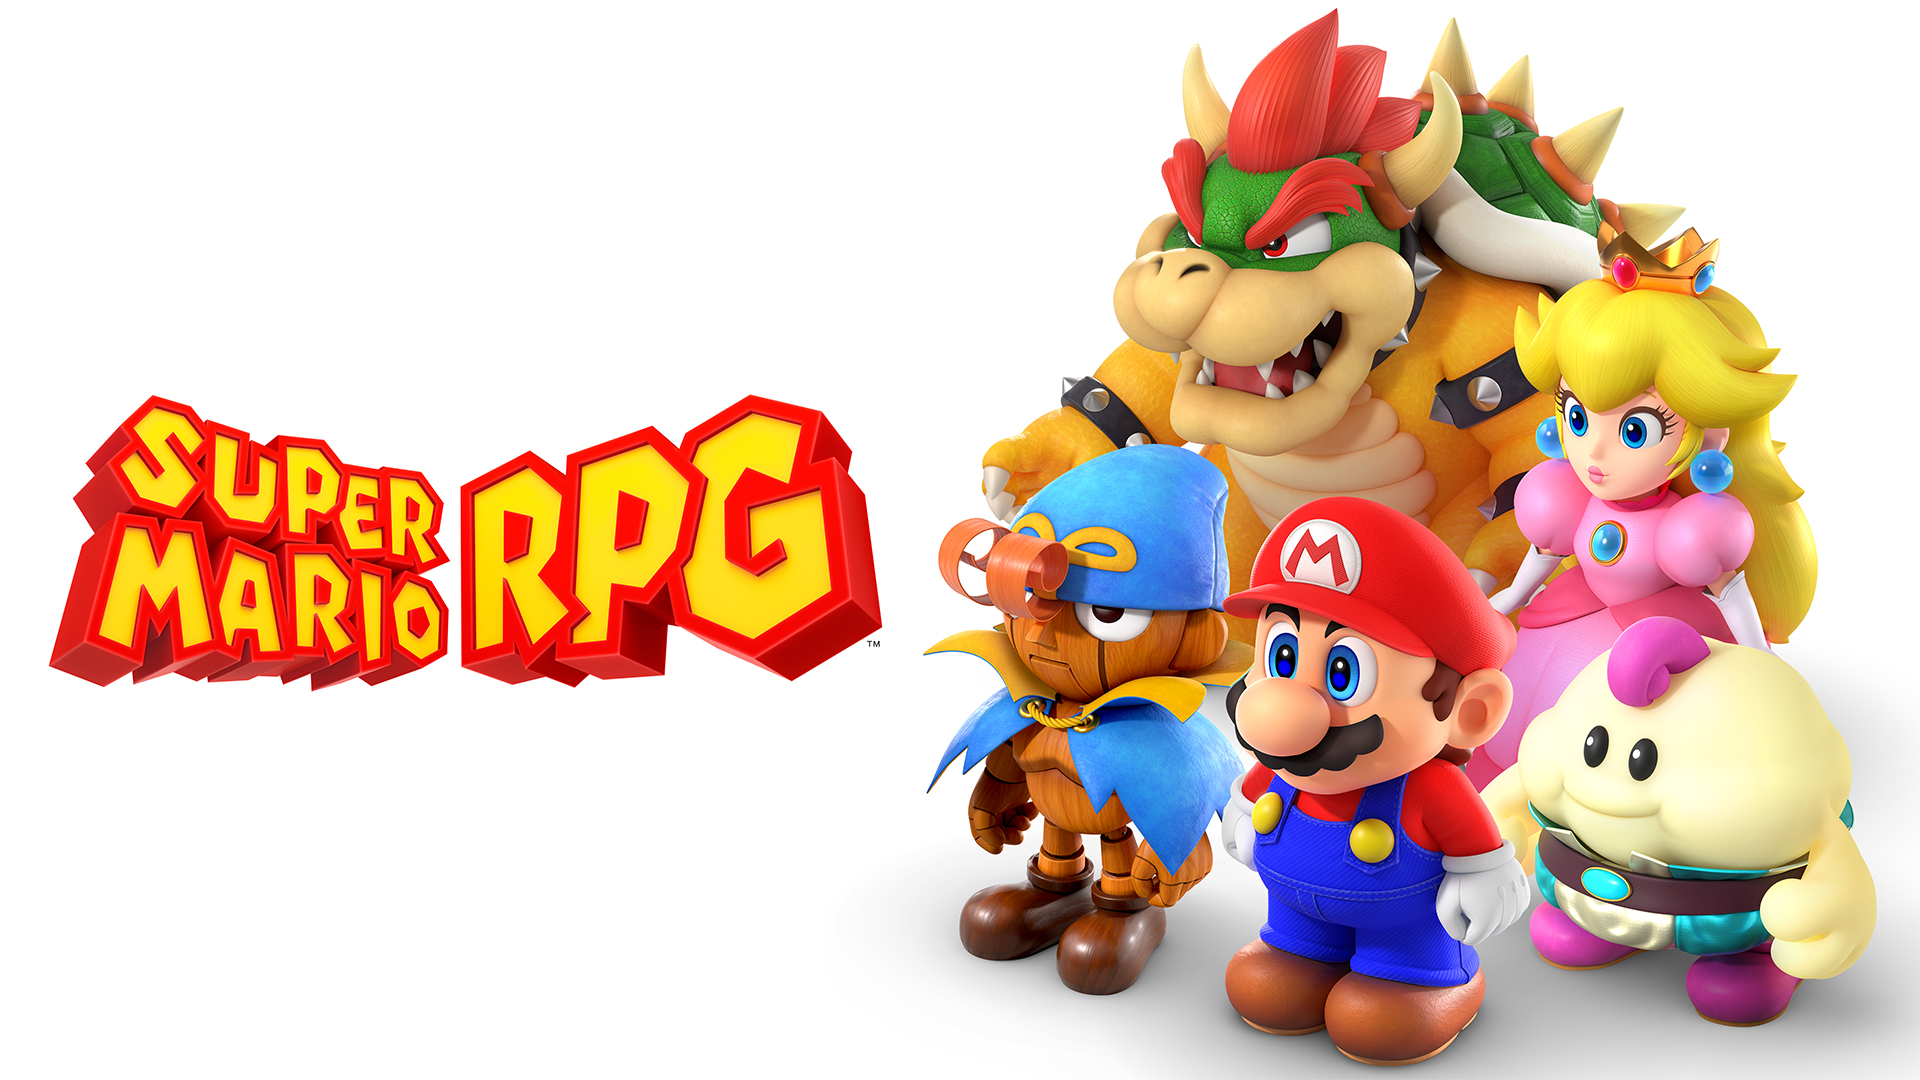 Super Mario Bros. Wonder, Super Mario RPG and Many More Games